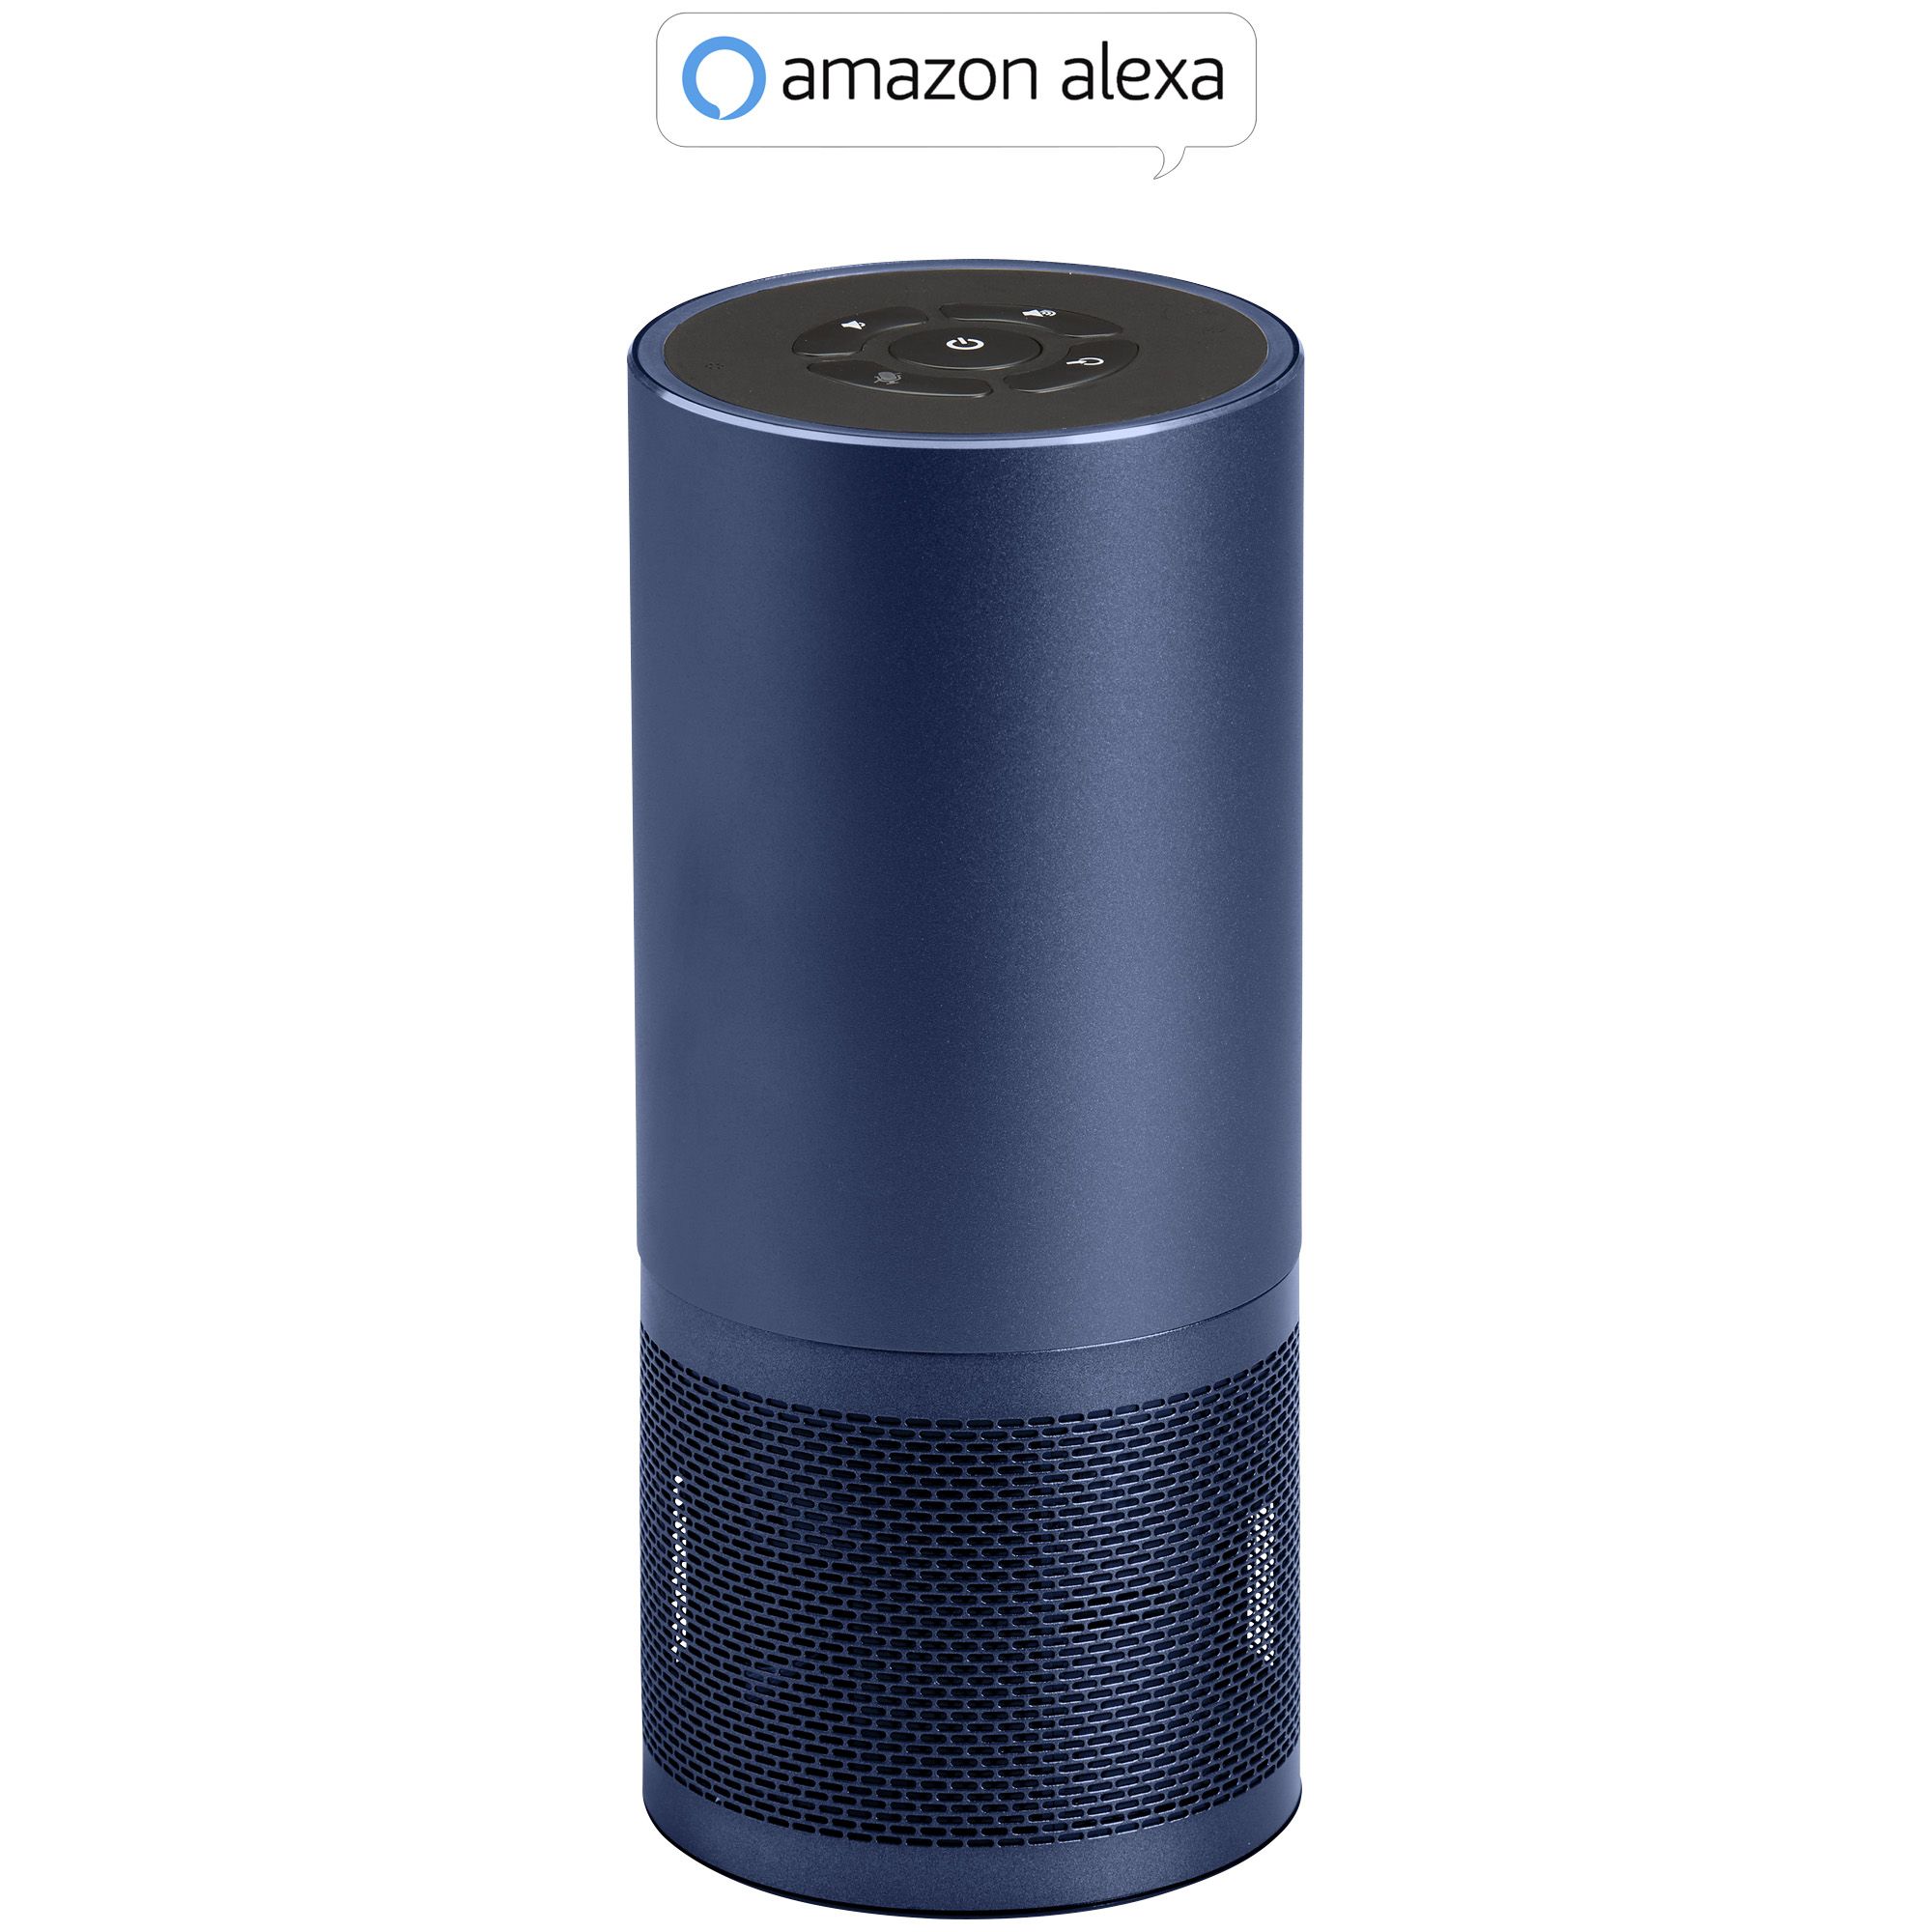 Blue NPVX5 AVGO Wi-Fi Bluetooth Speaker with Amazon Alexa Voice Control 